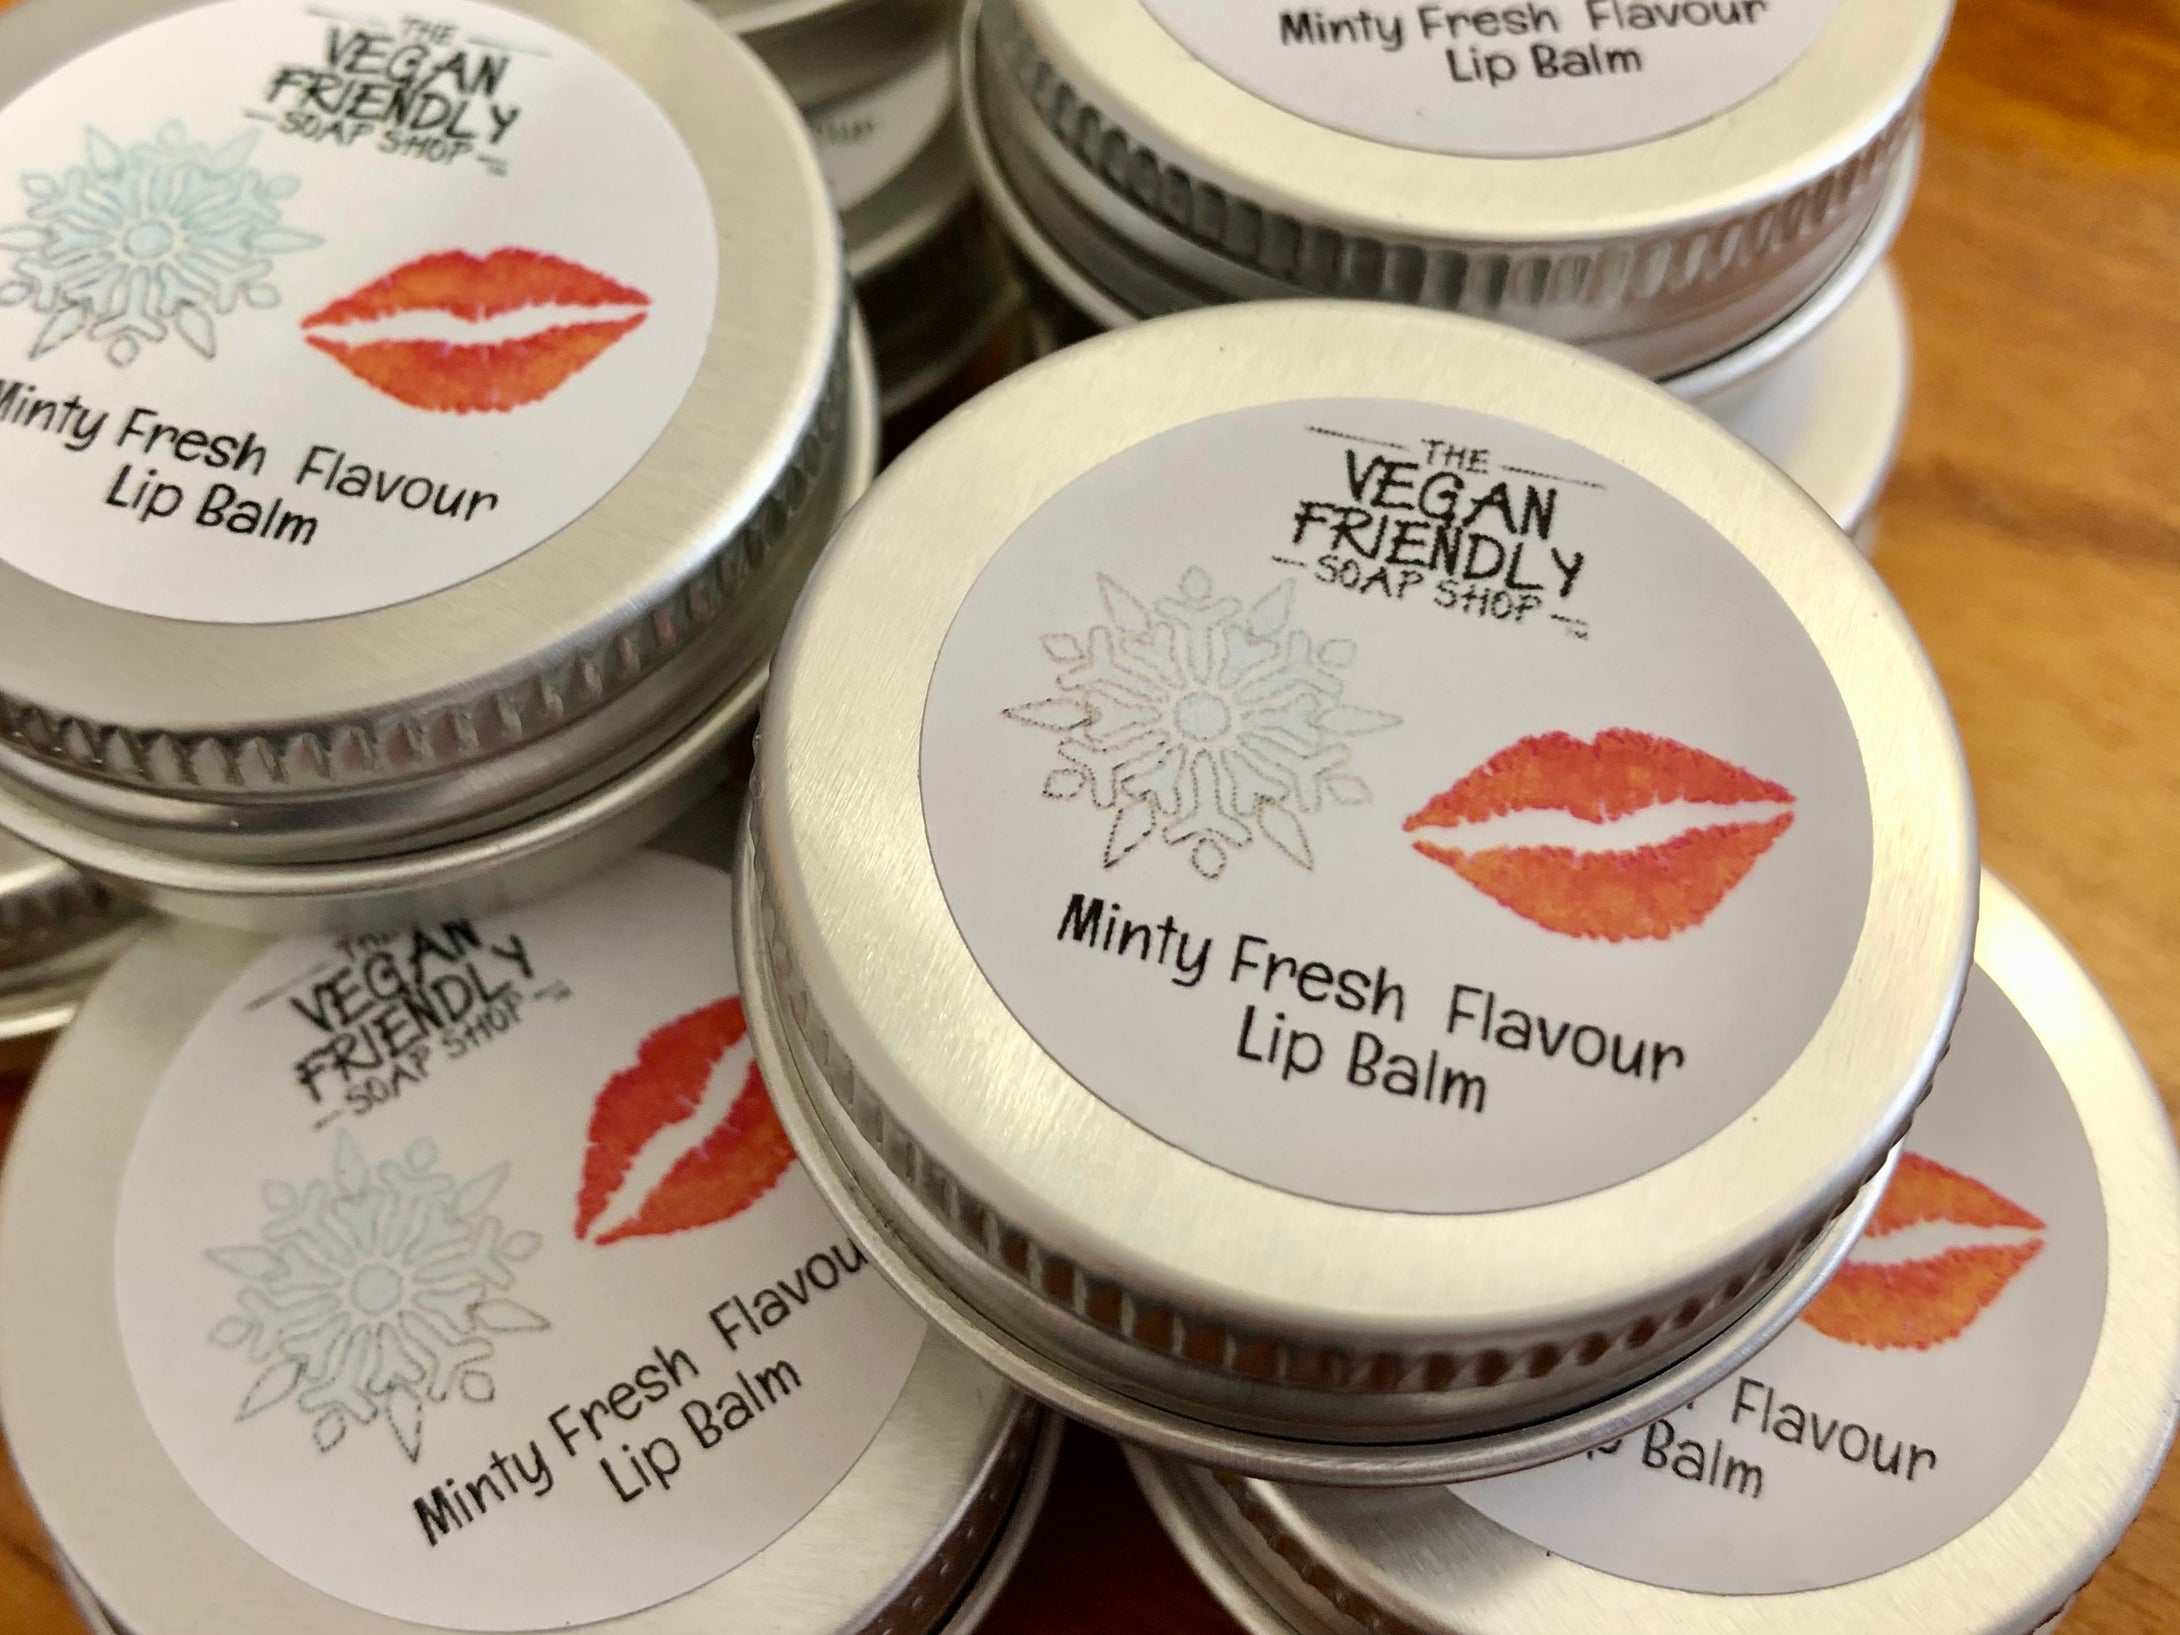 Minty Fresh Flavour - Lip Balm